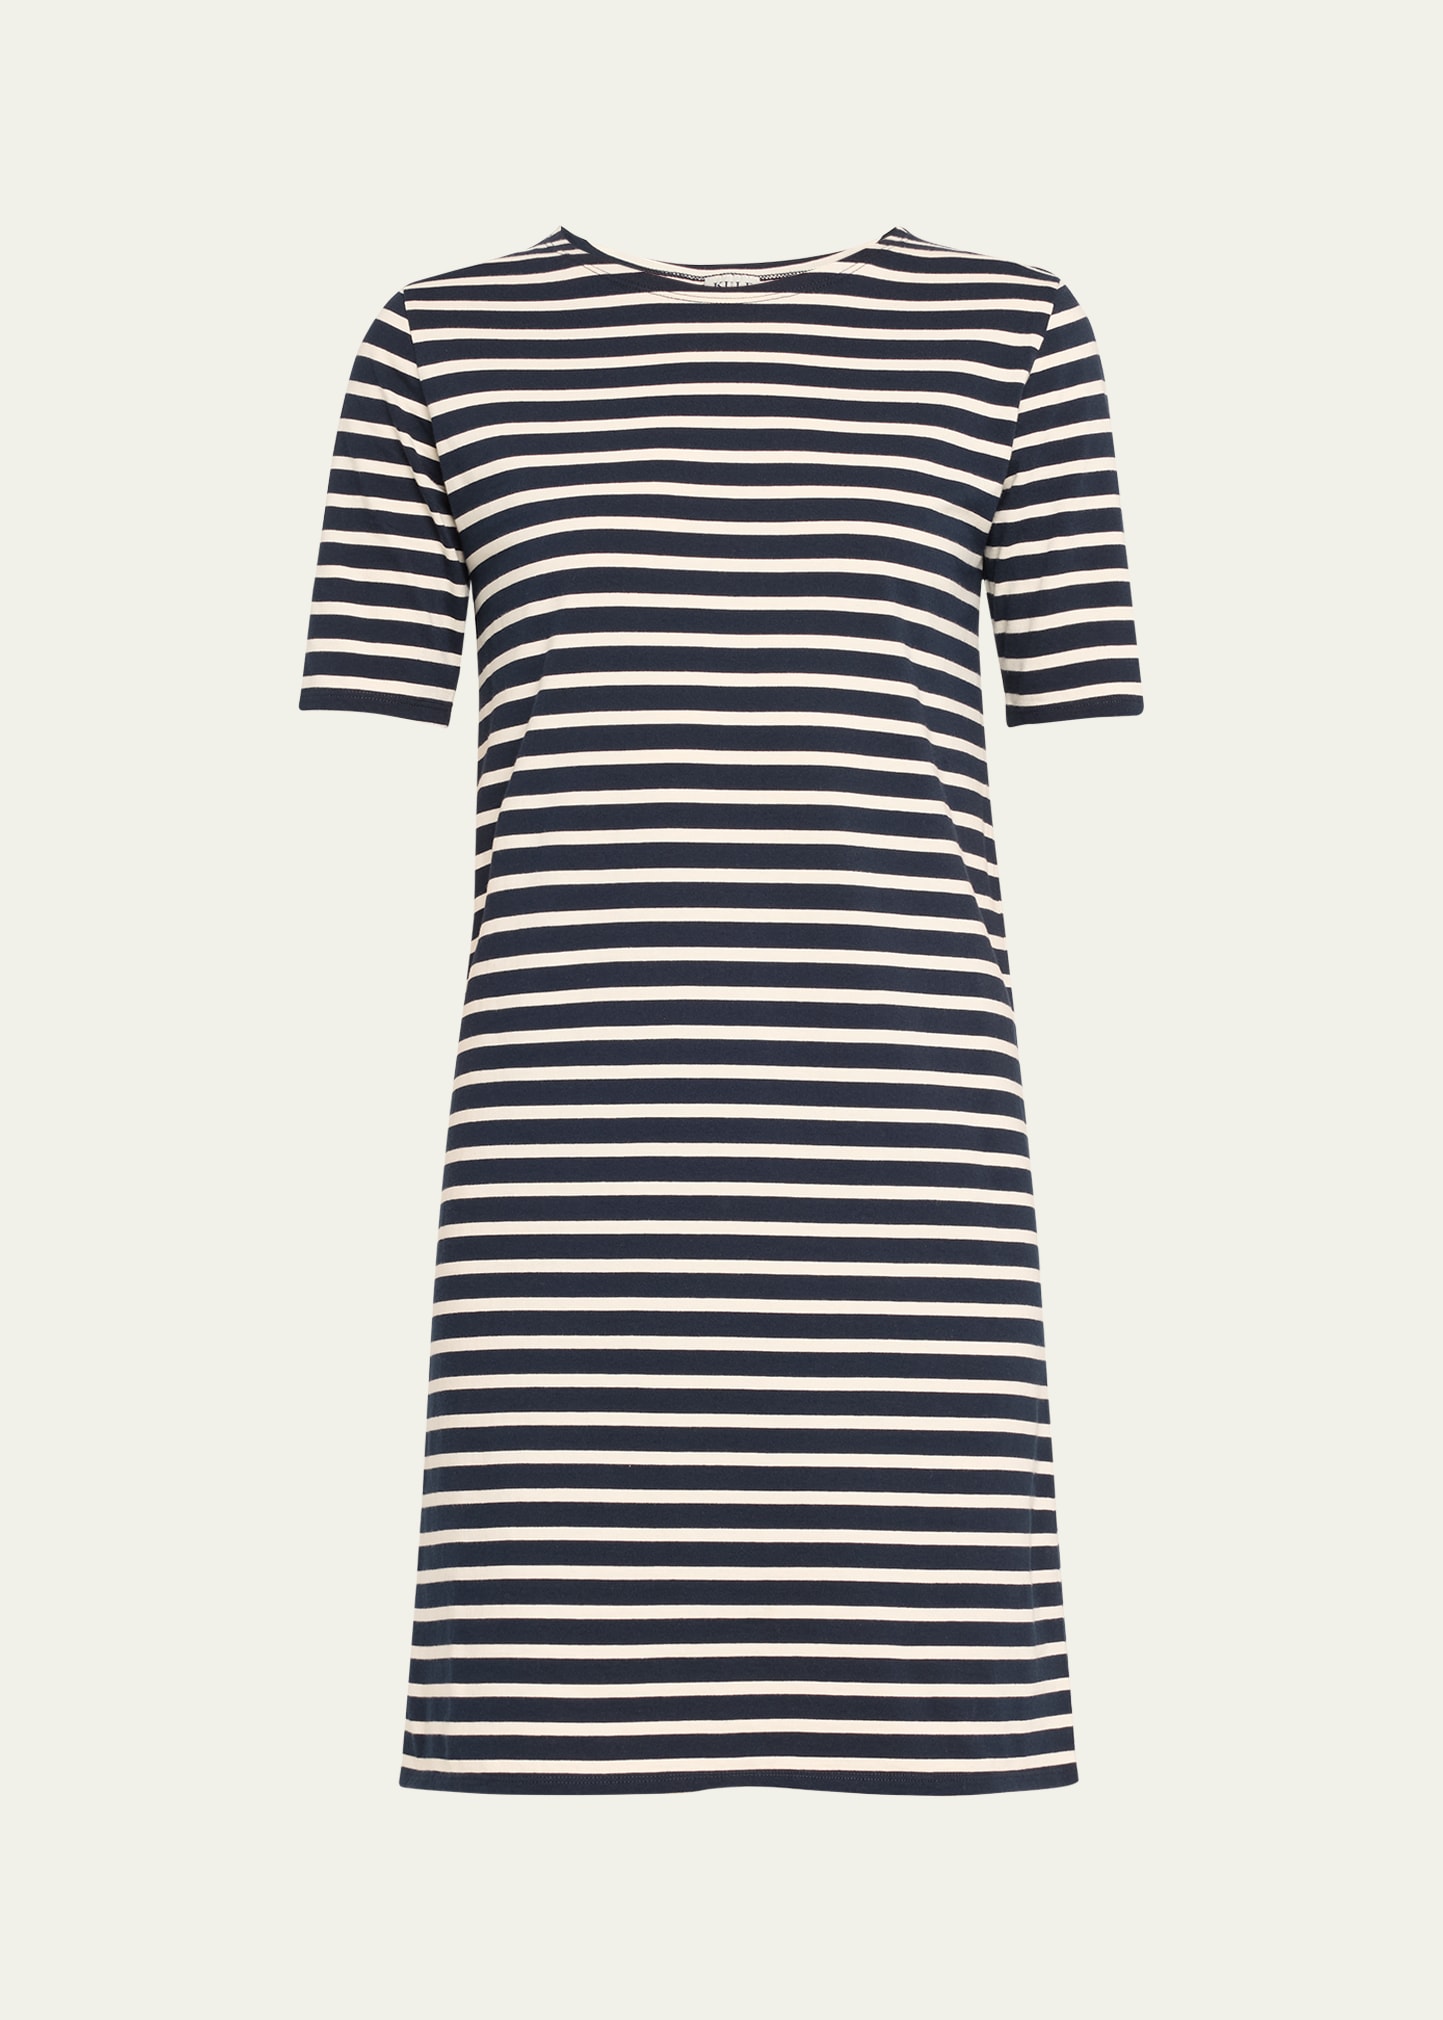 Crewneck Short-Sleeve Striped Tee Dress